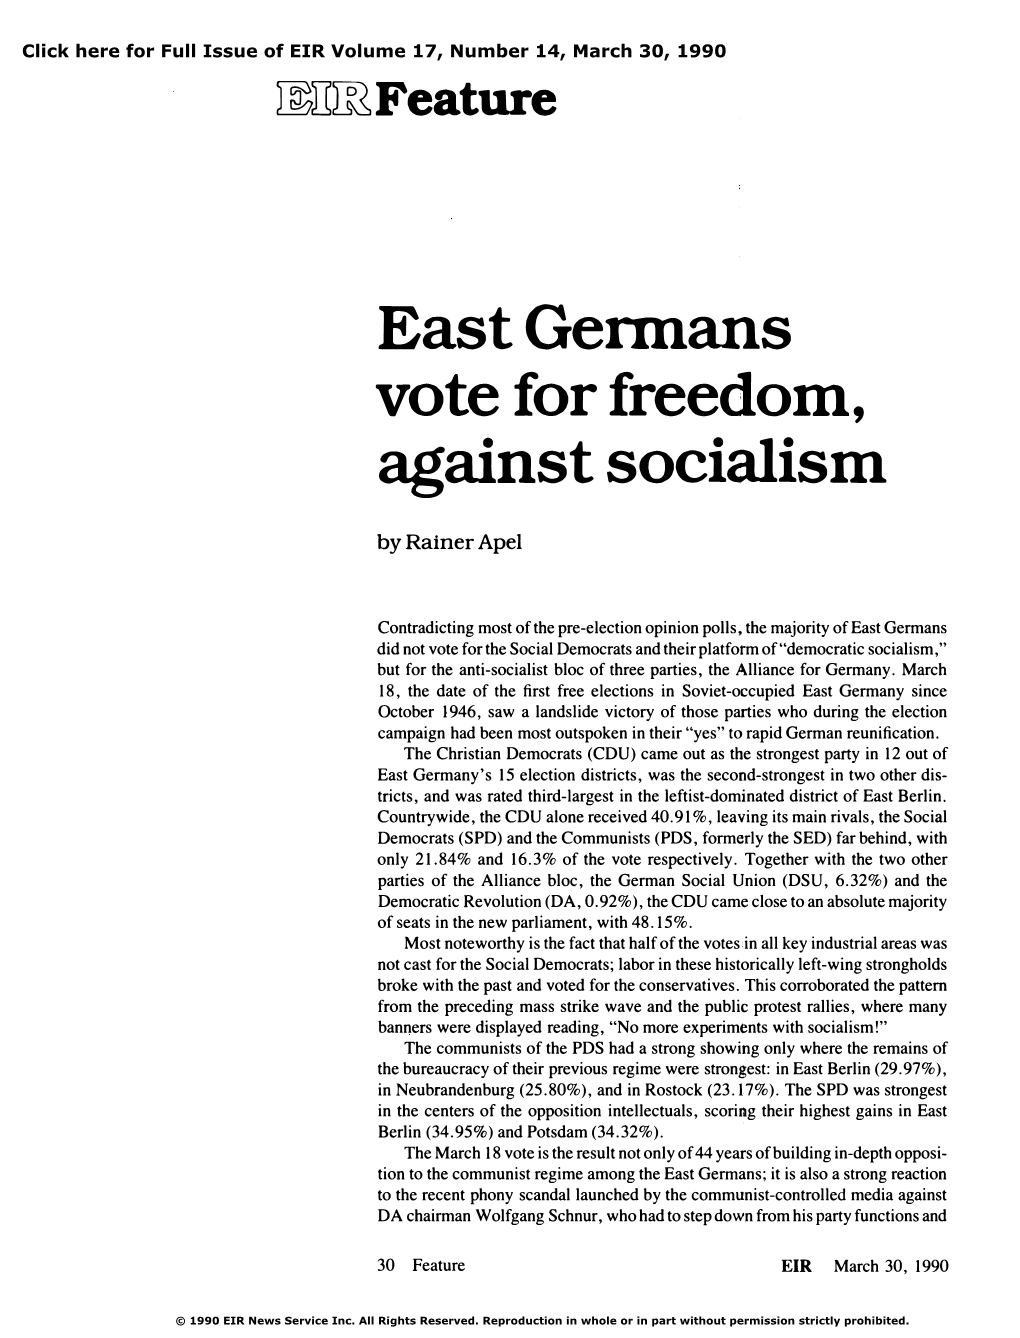 East Germans Vote for Freedom, Against Socialism